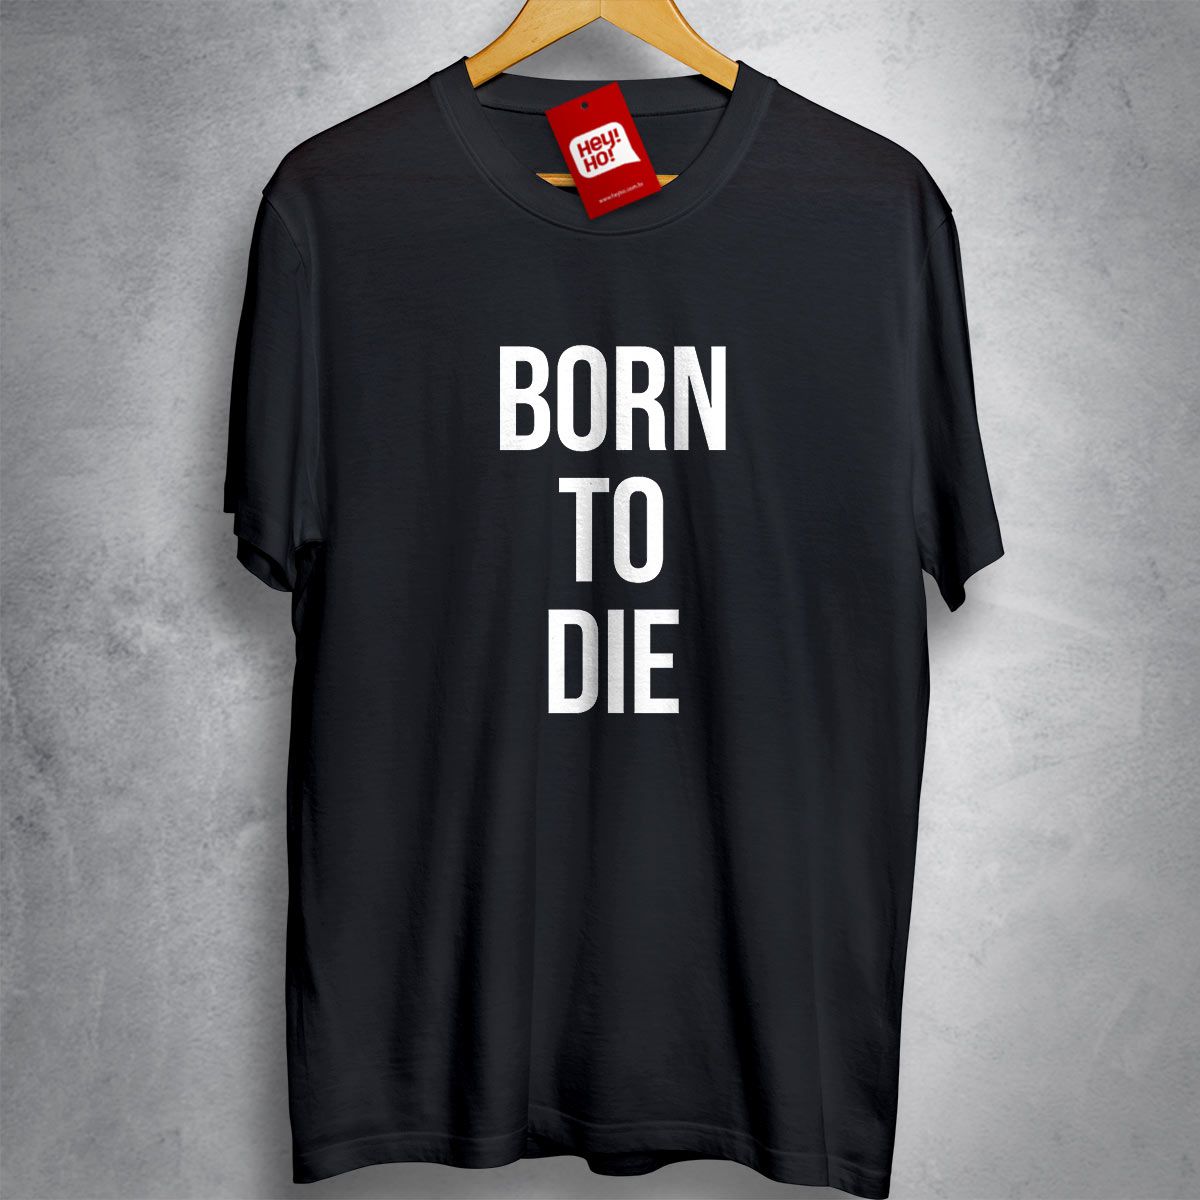 LANA DEL REY - Born to Die